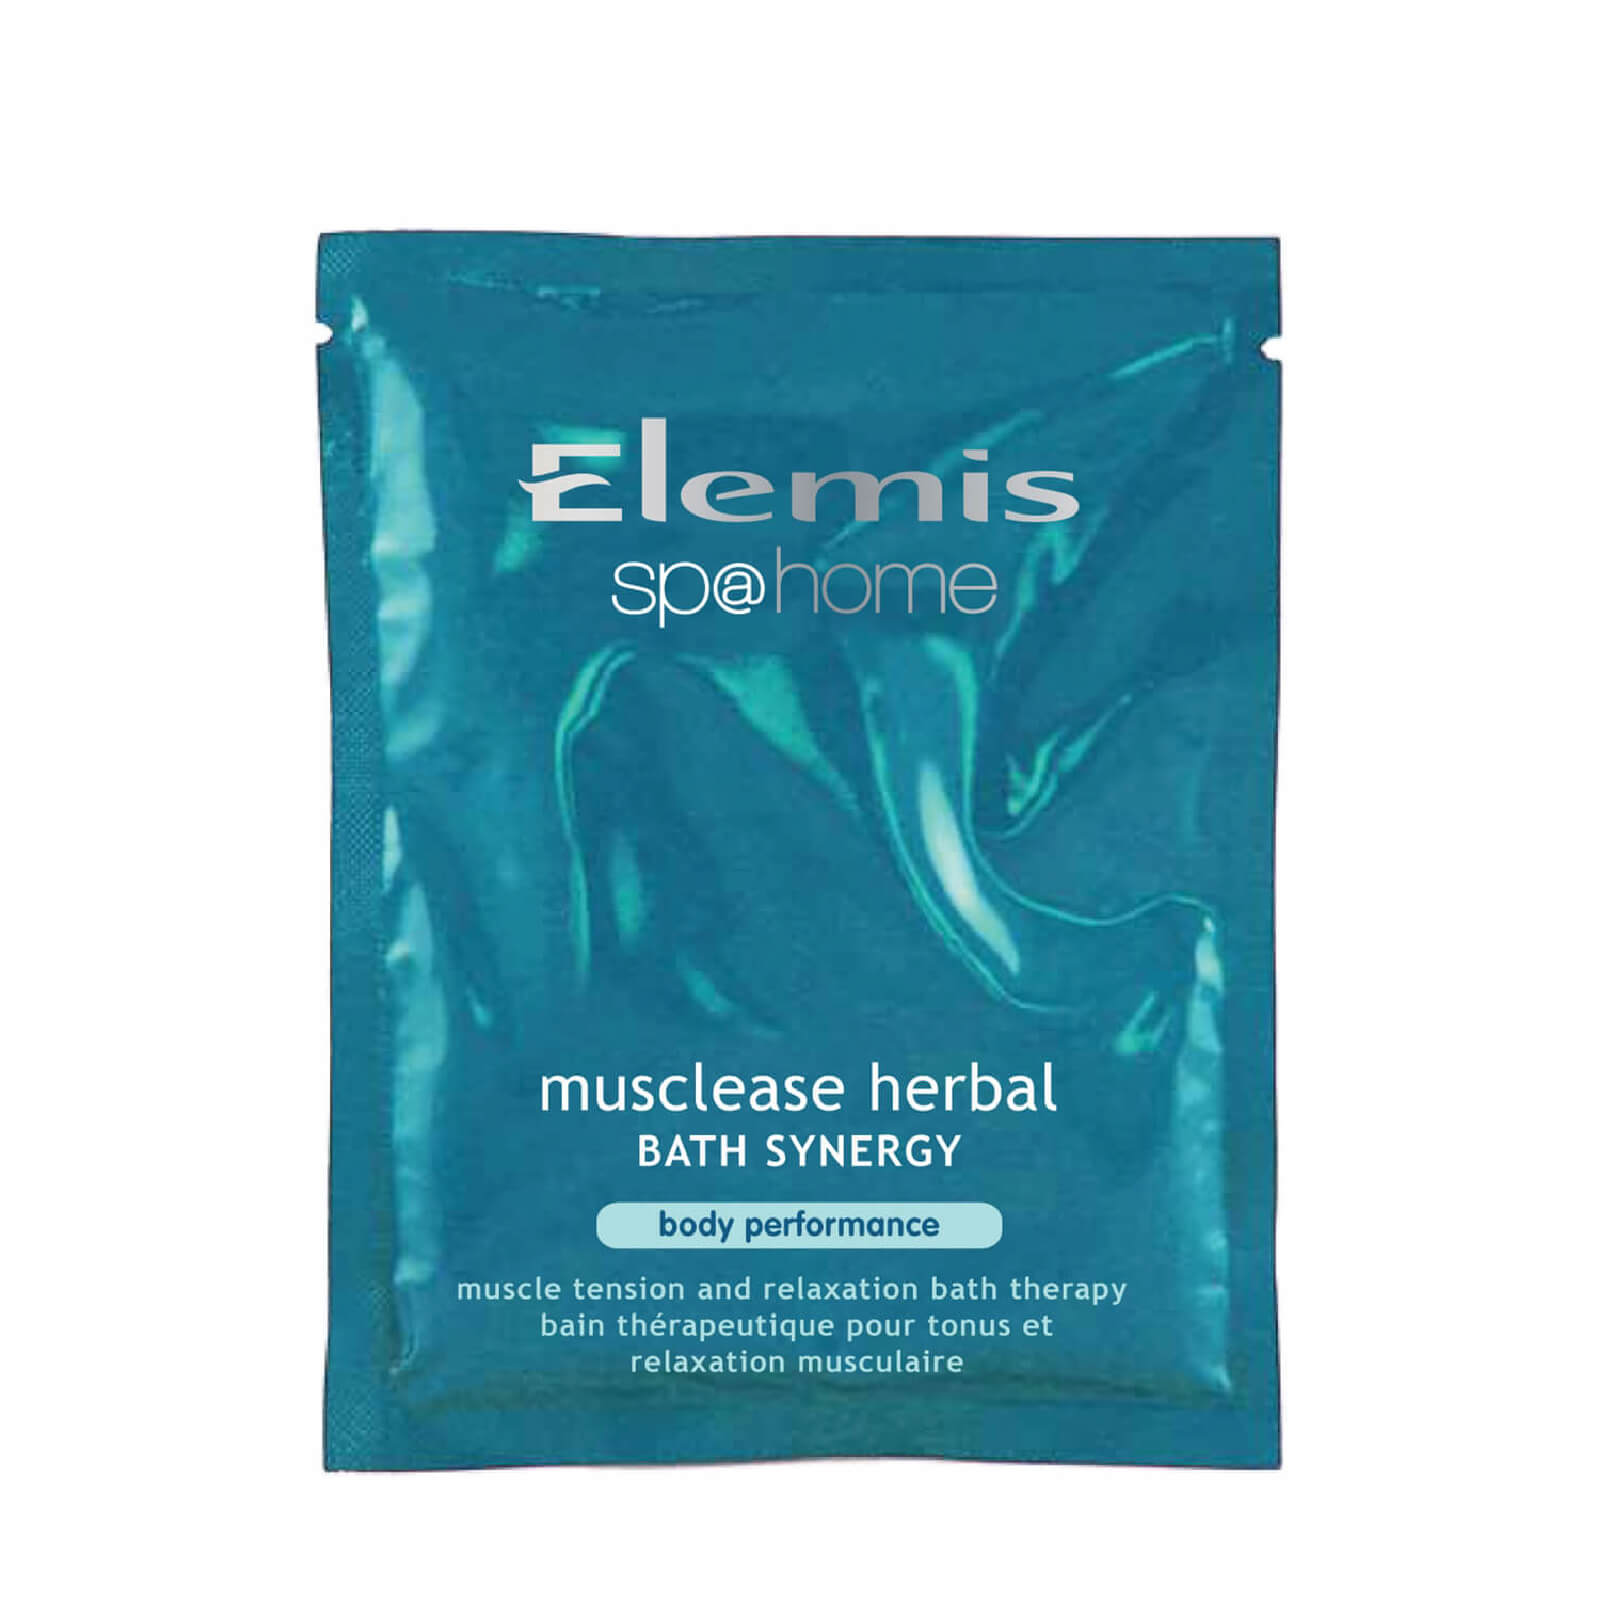 Elemis Sp@home Musclease Herbal Bath Synergy, Skin Care, London Loves Beauty